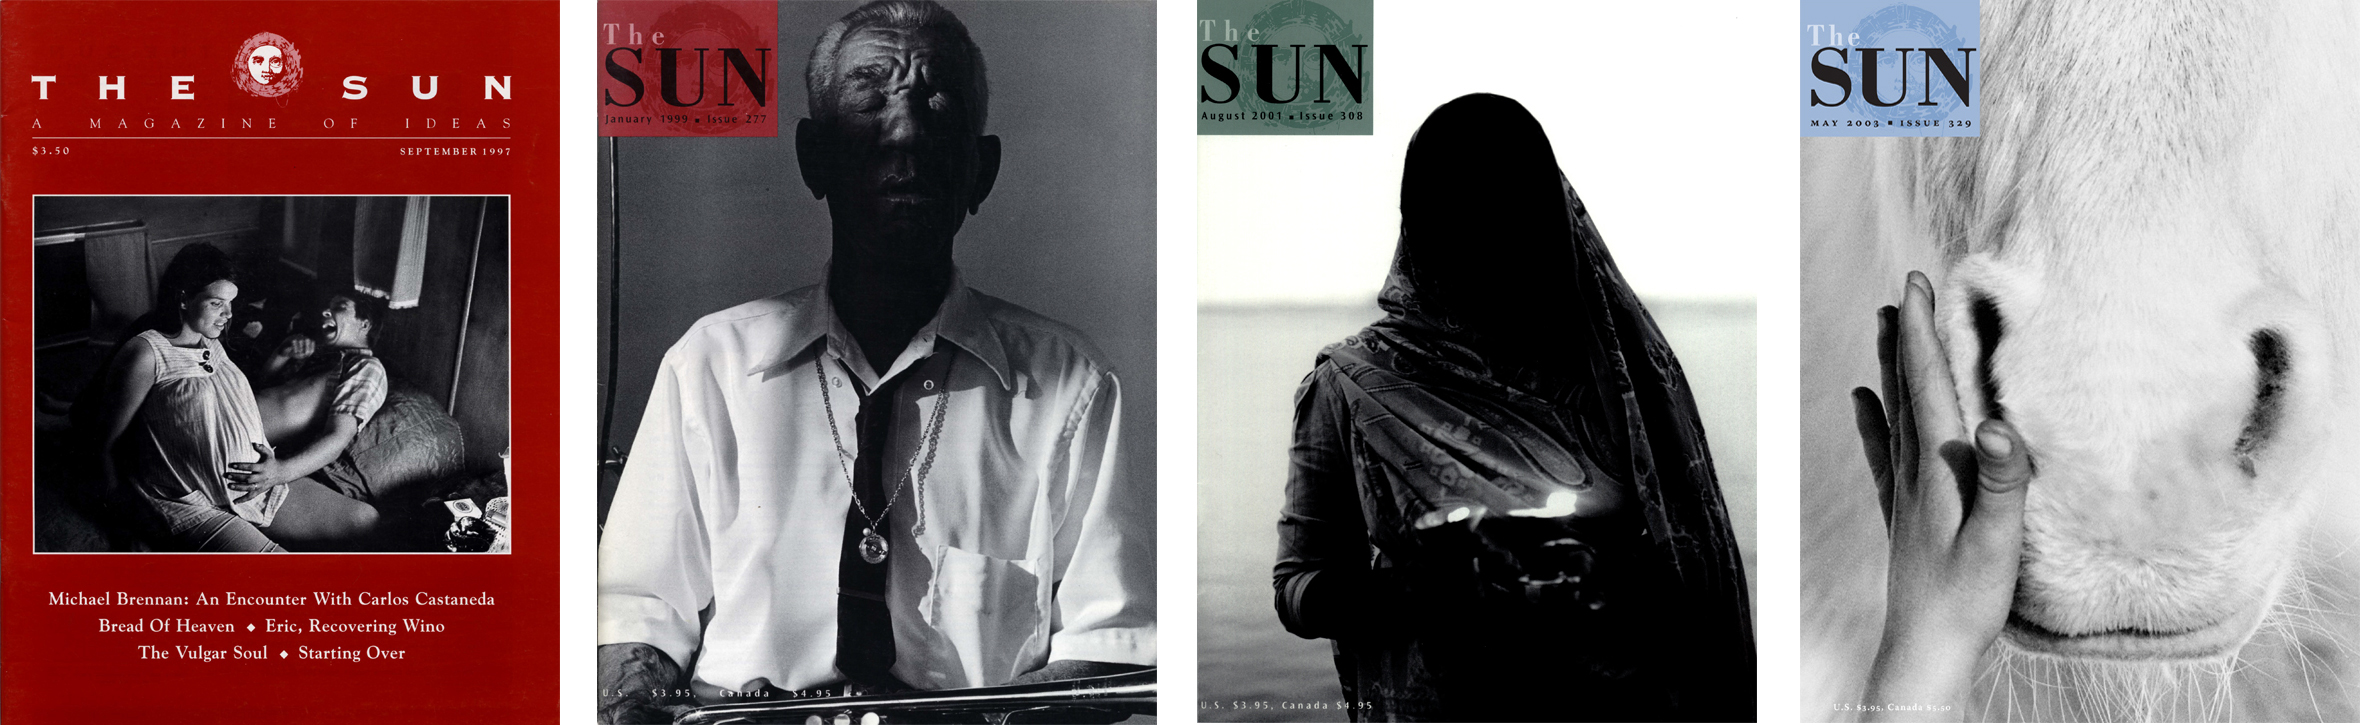 457 - Sun - Covers 1997-2003